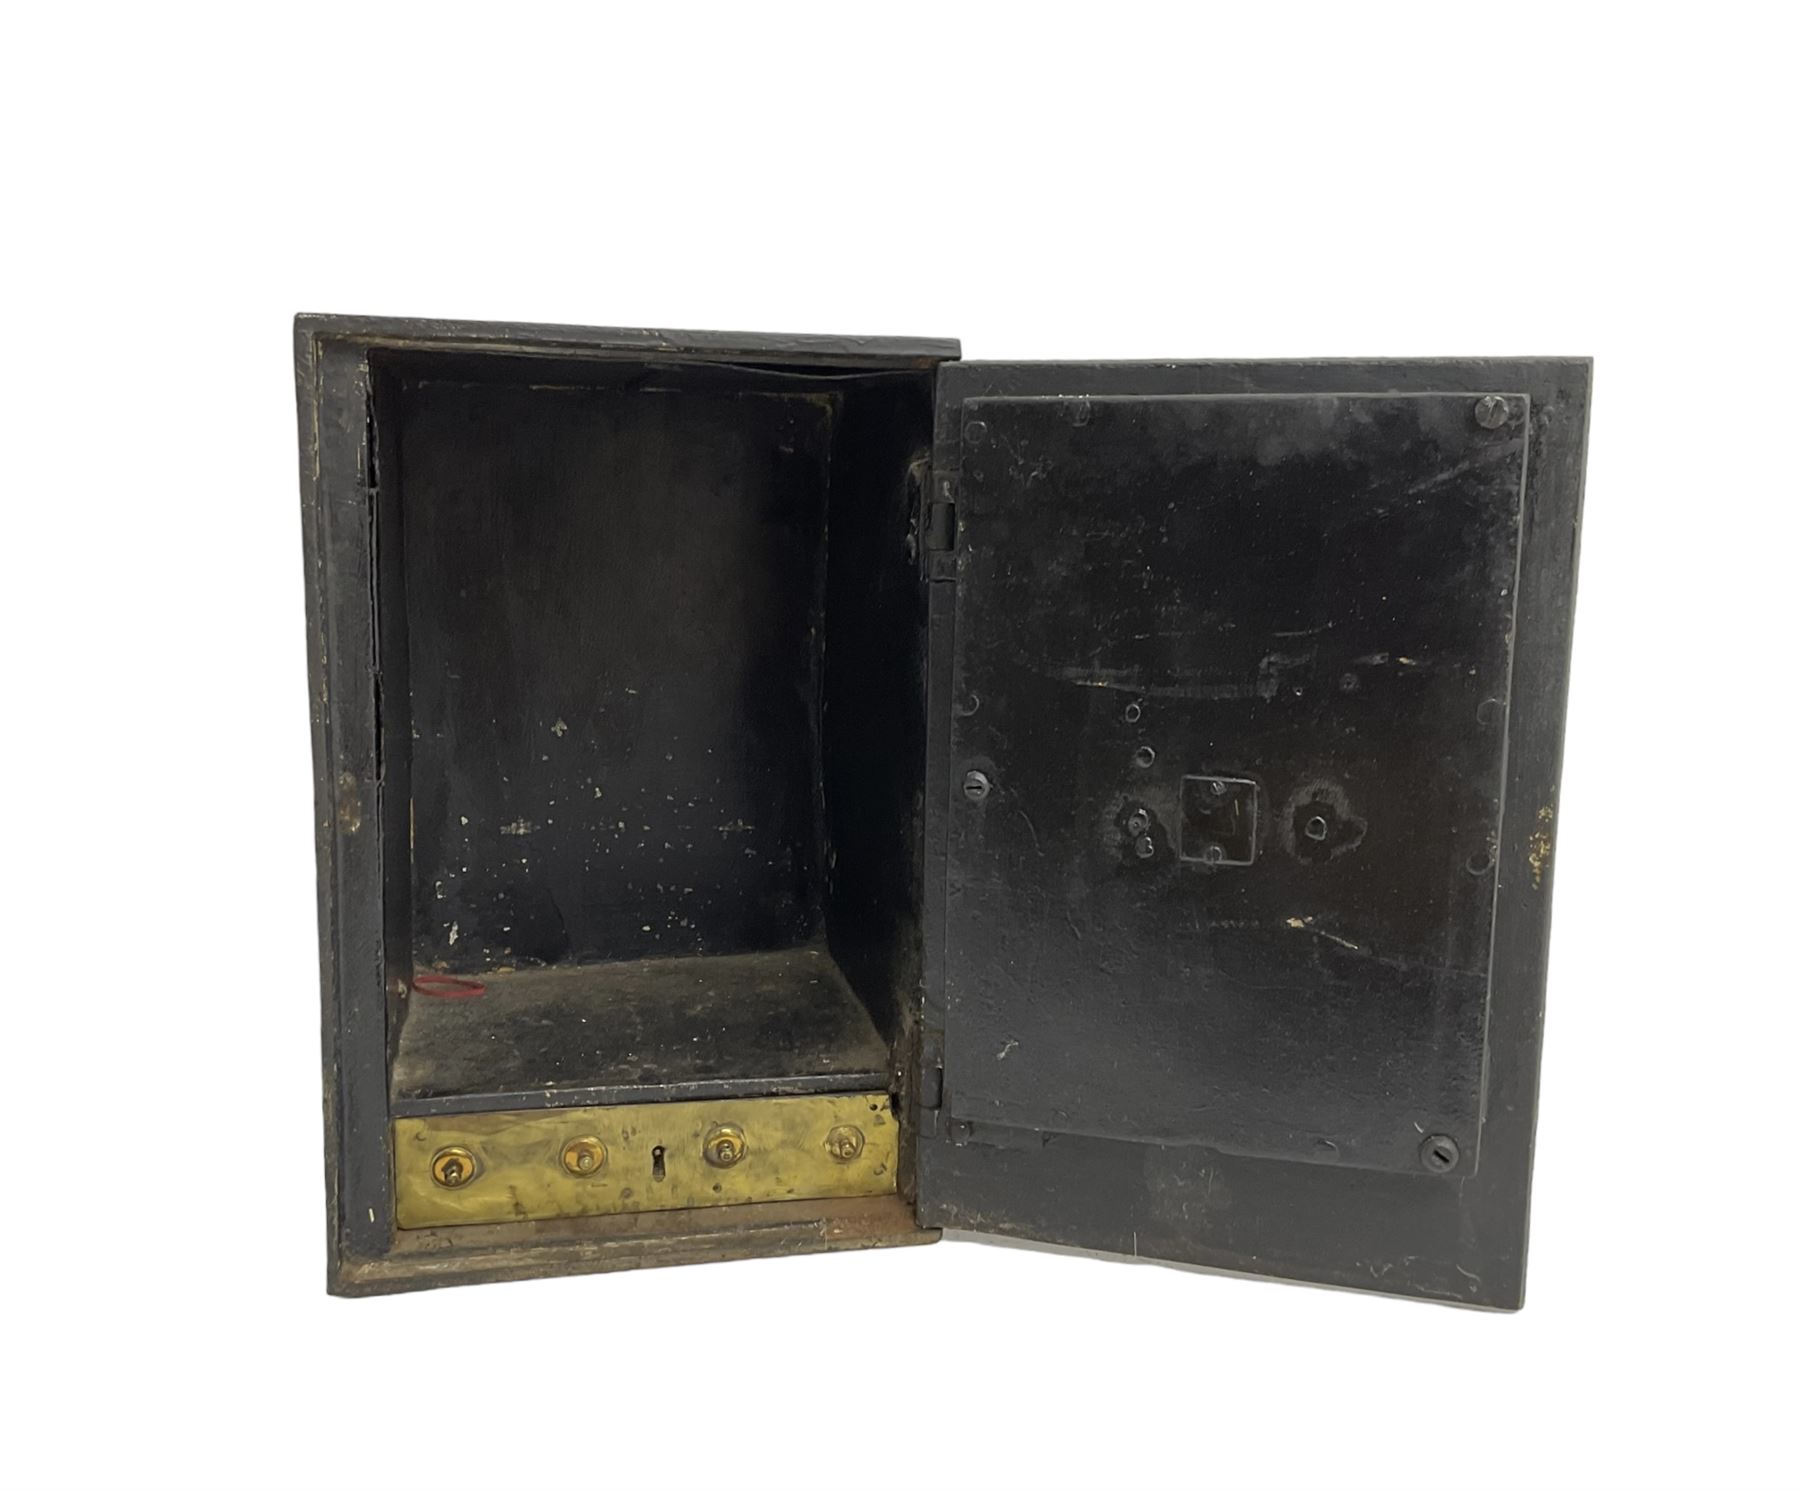 Black painted cast iron safe - Image 2 of 6